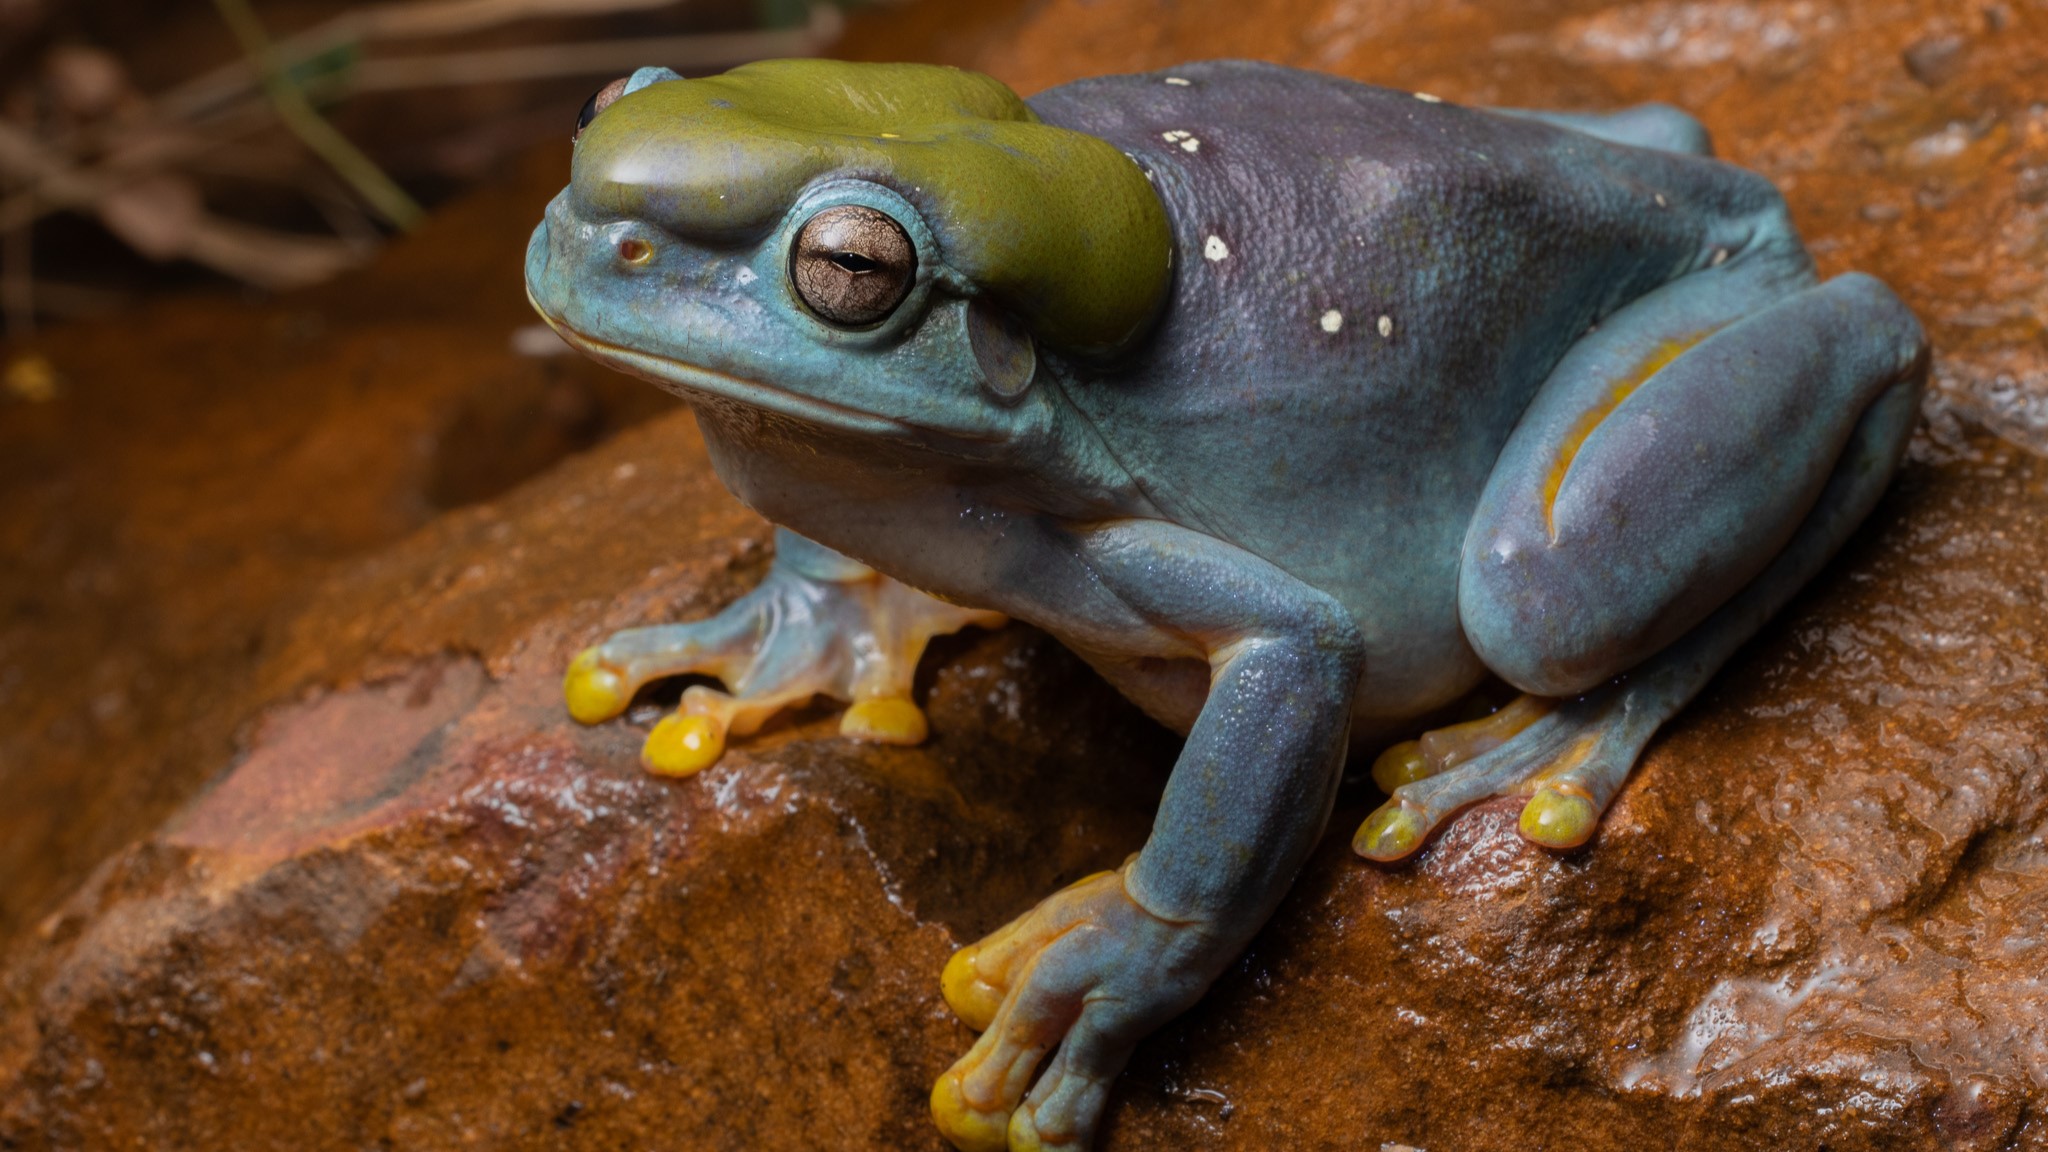  'Lovely freak of nature': Mutant blue frog hops into wildlife sanctuary workshop 